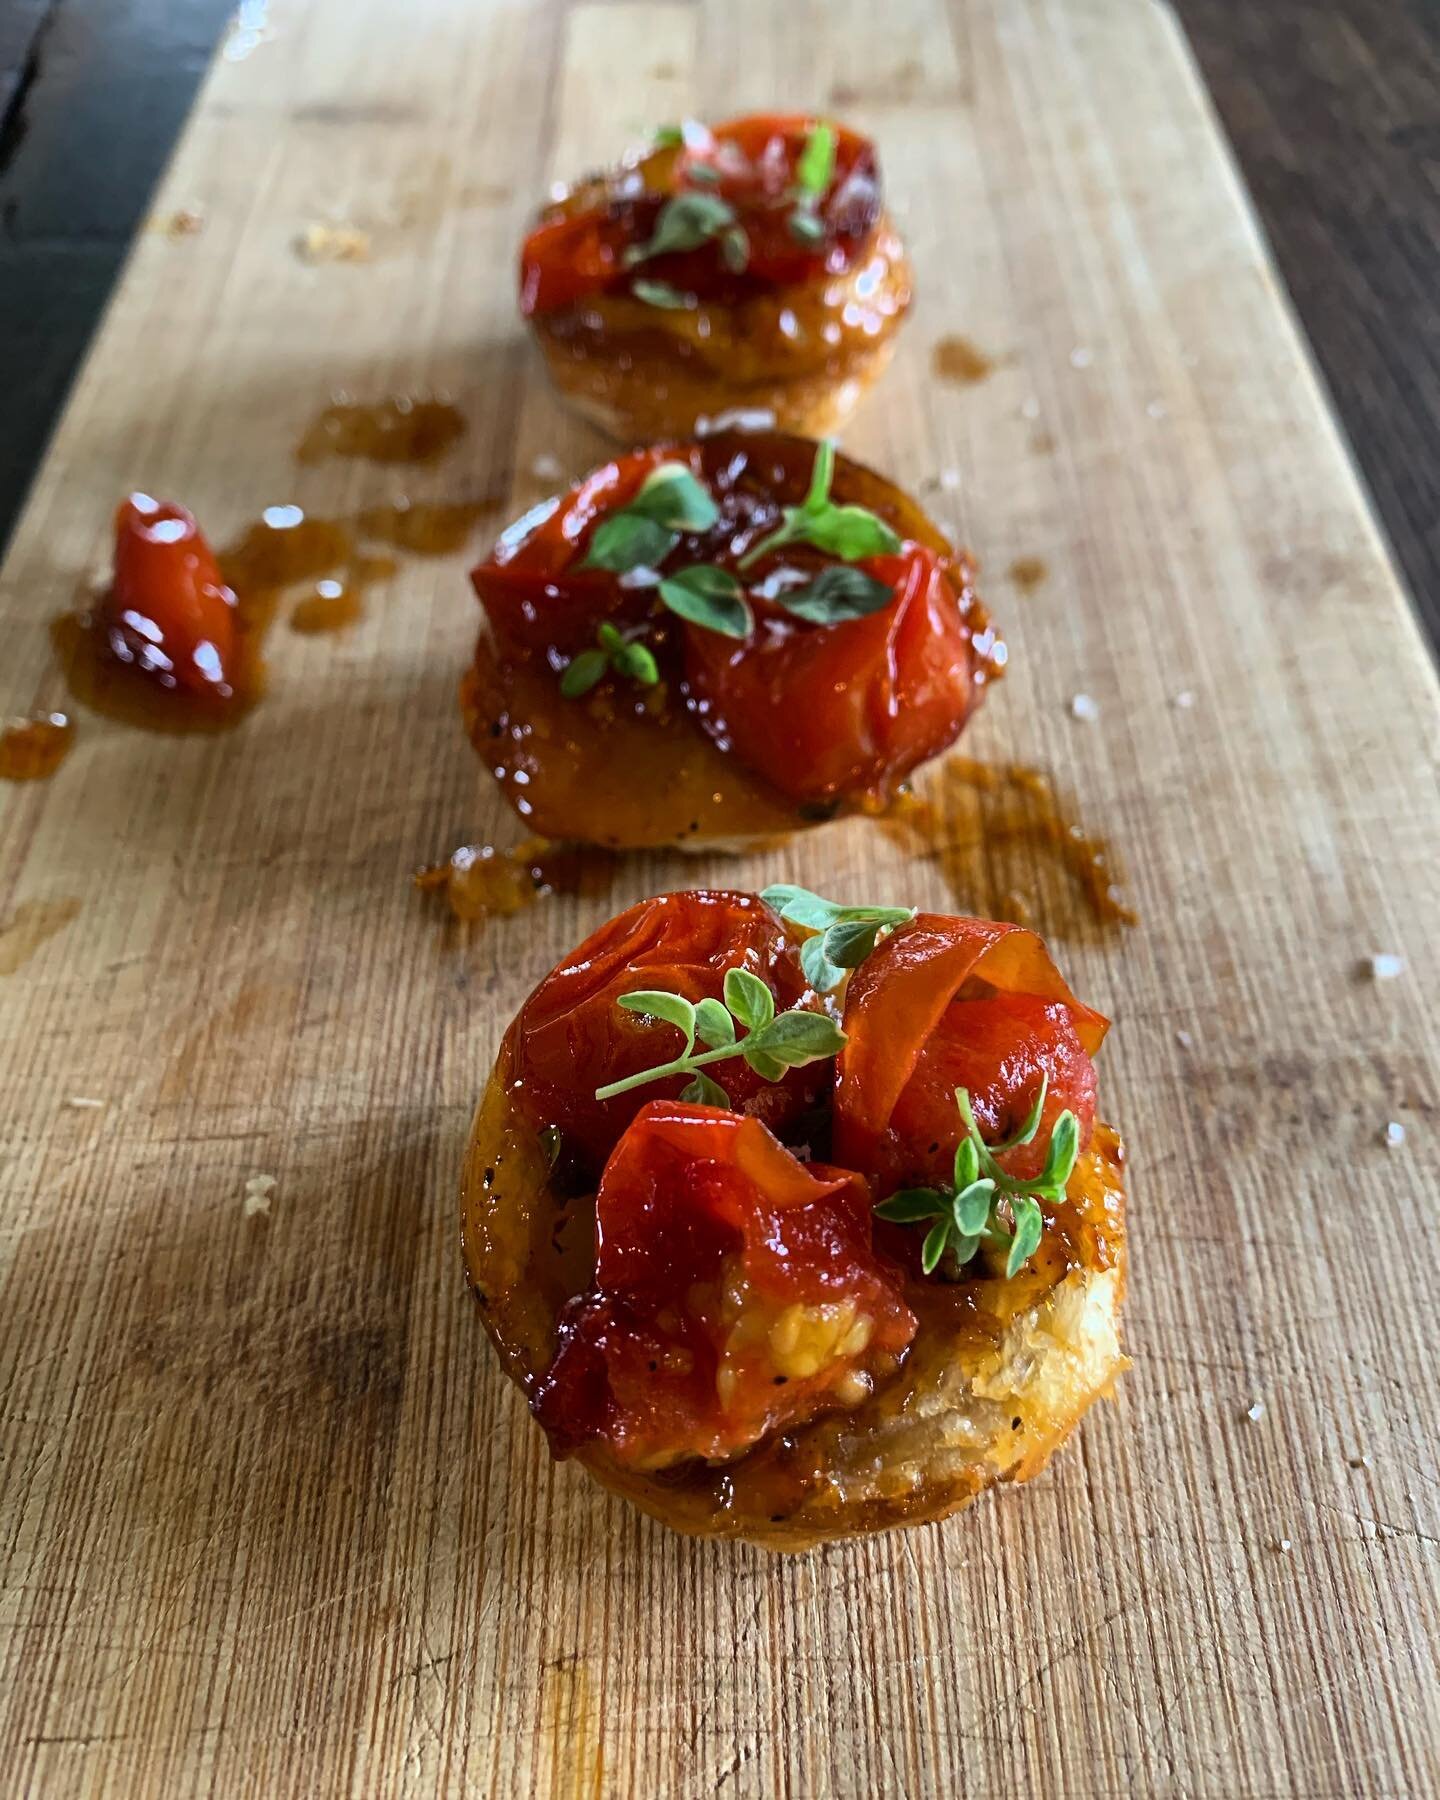 Little teeny tomato tarte tatins cuz I&rsquo;m feeling Frenchy today 🥰 @thebarnnc